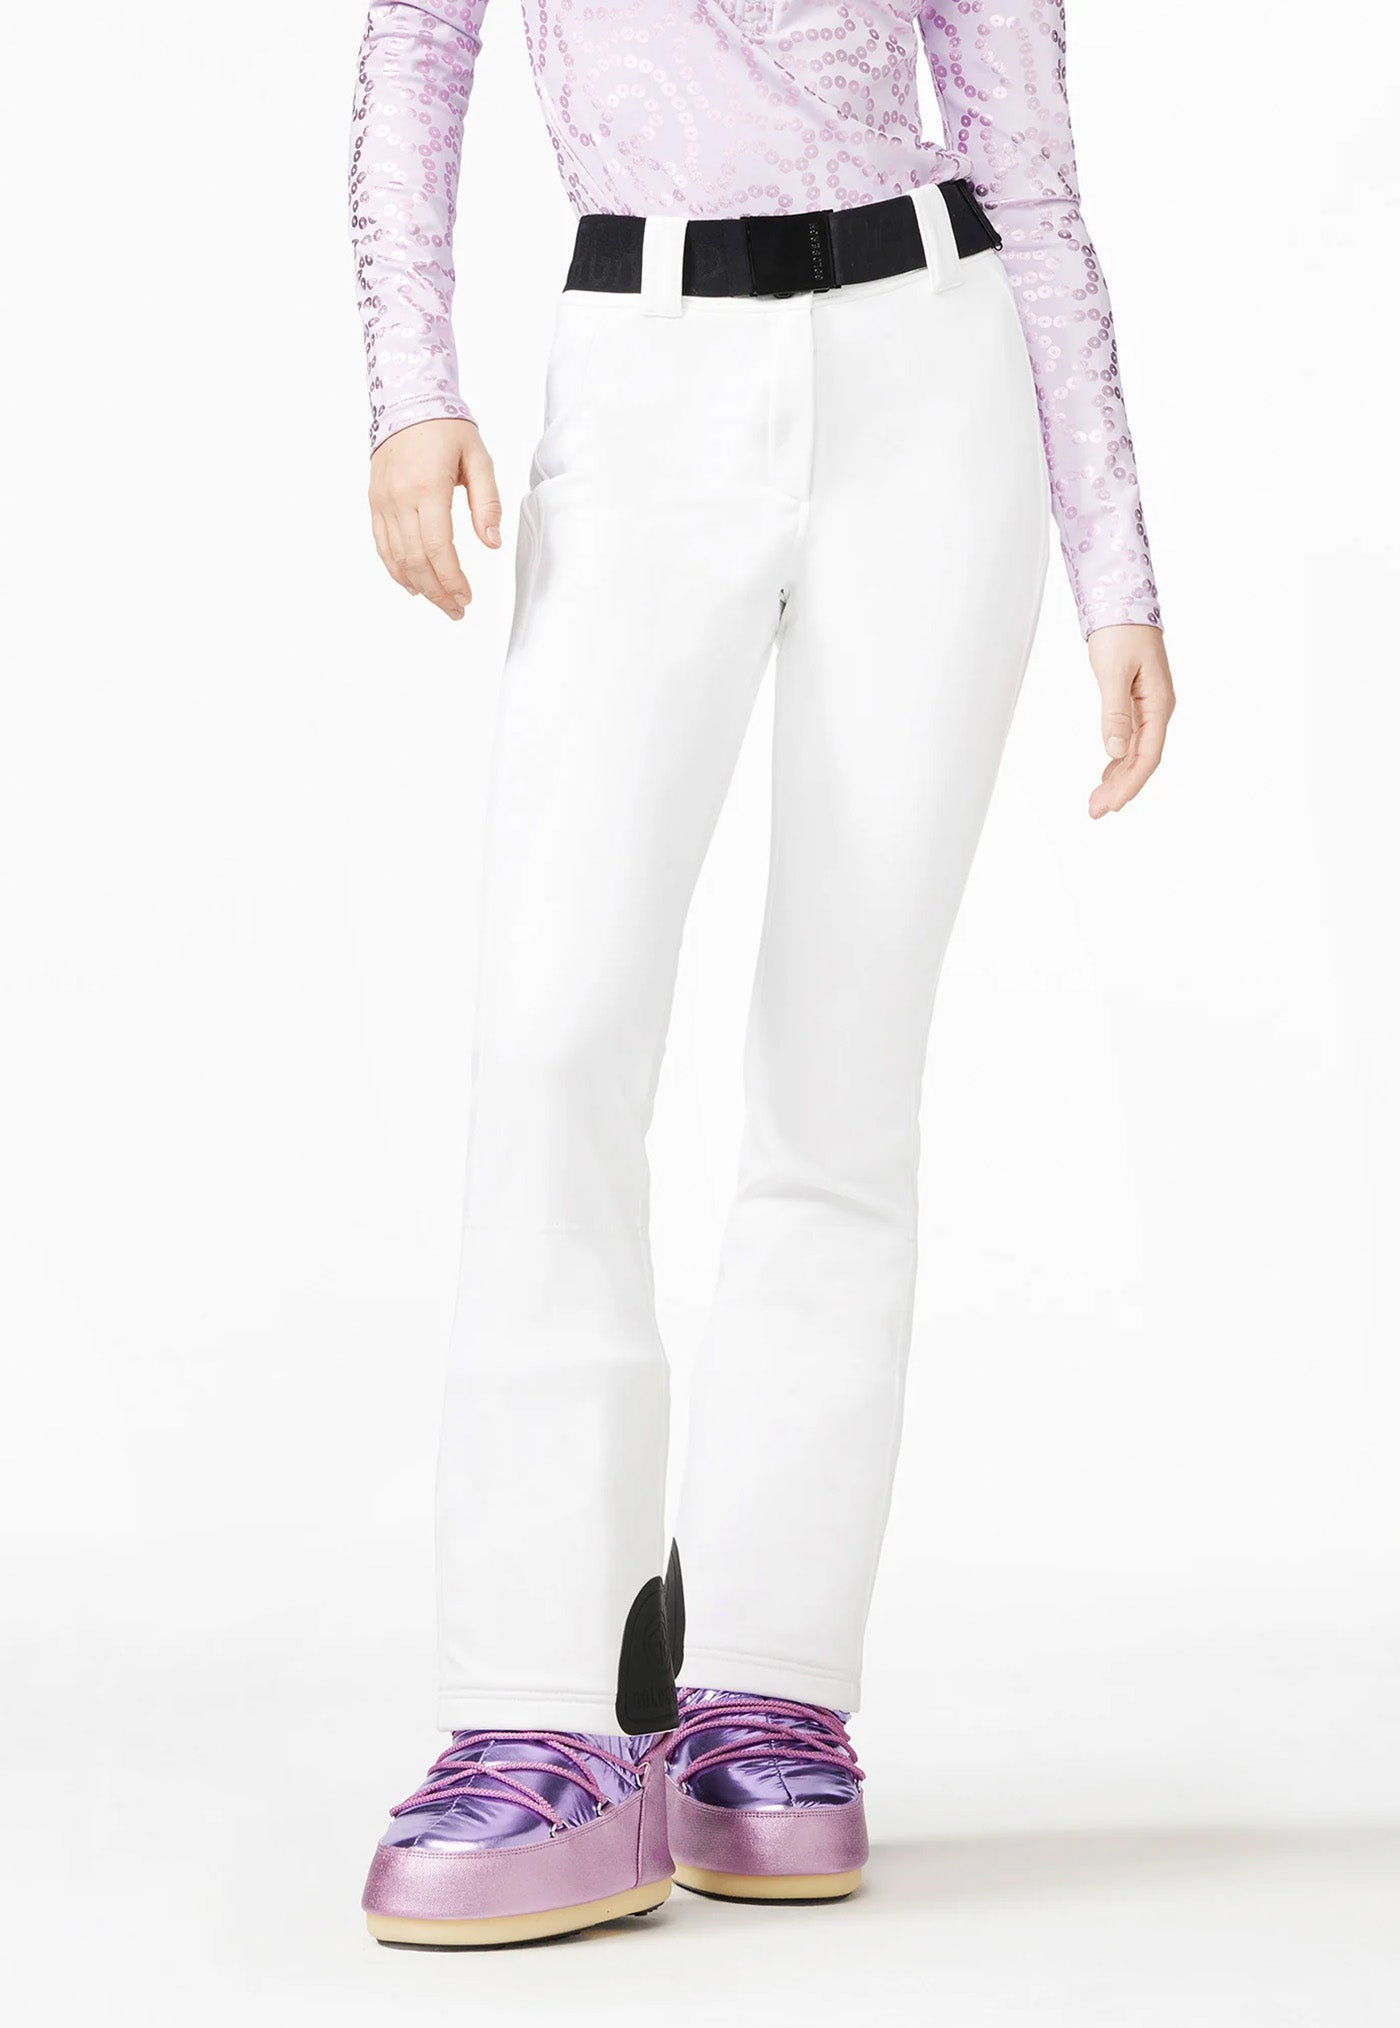 Pippa Ski Pants - White sold by Angel Divine